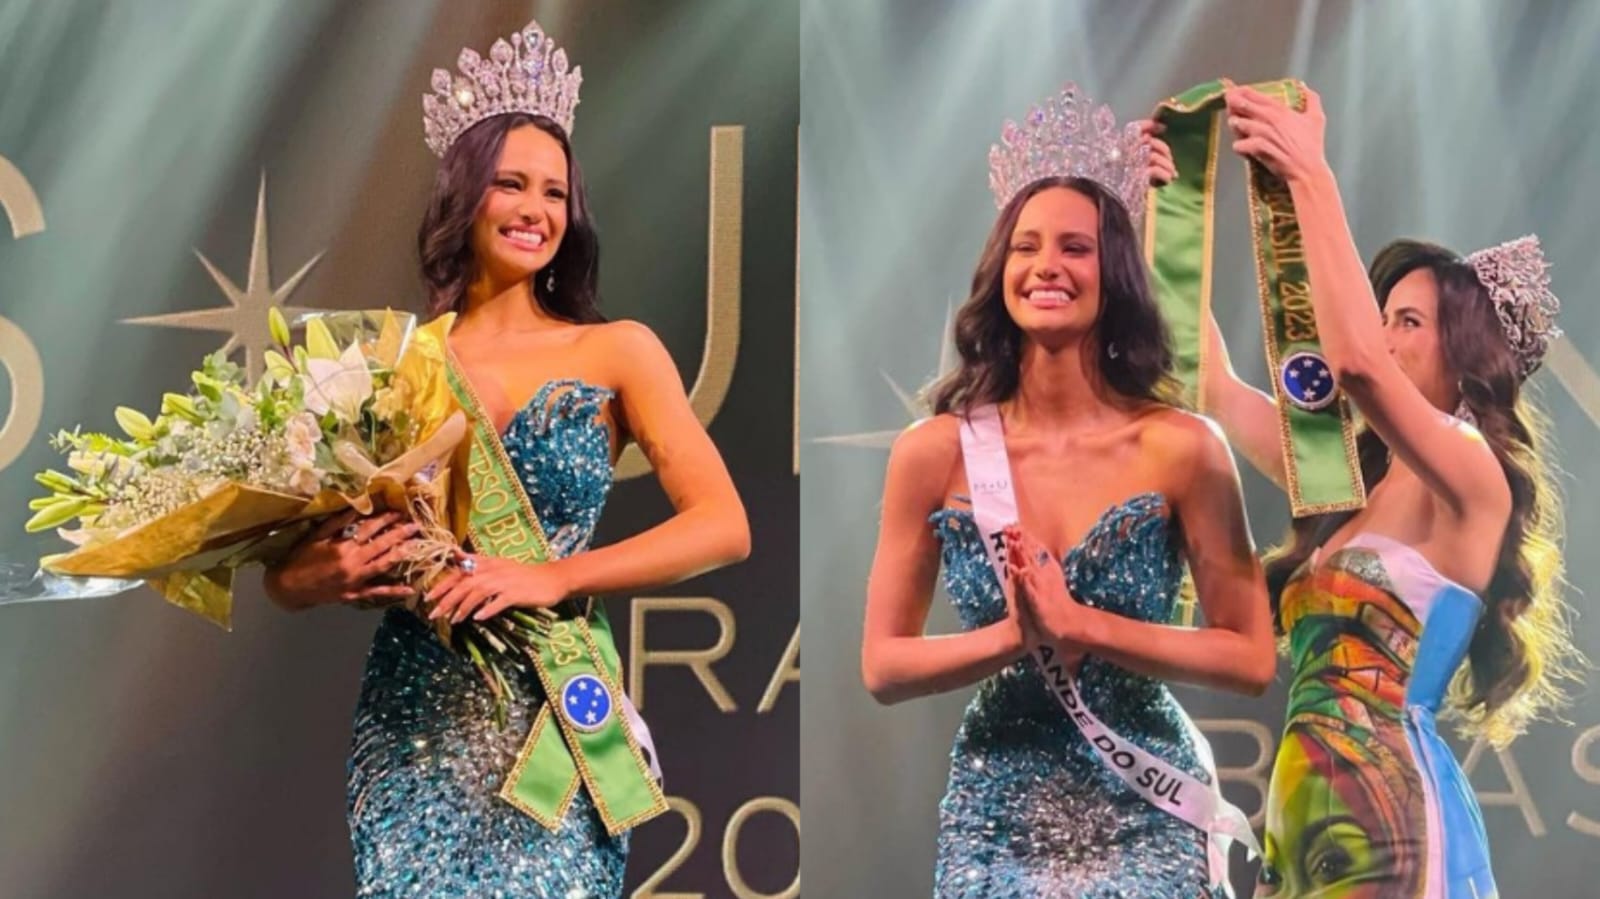 Gaúcha Maria Eduarda Brechane is elected Miss Brazil 2023